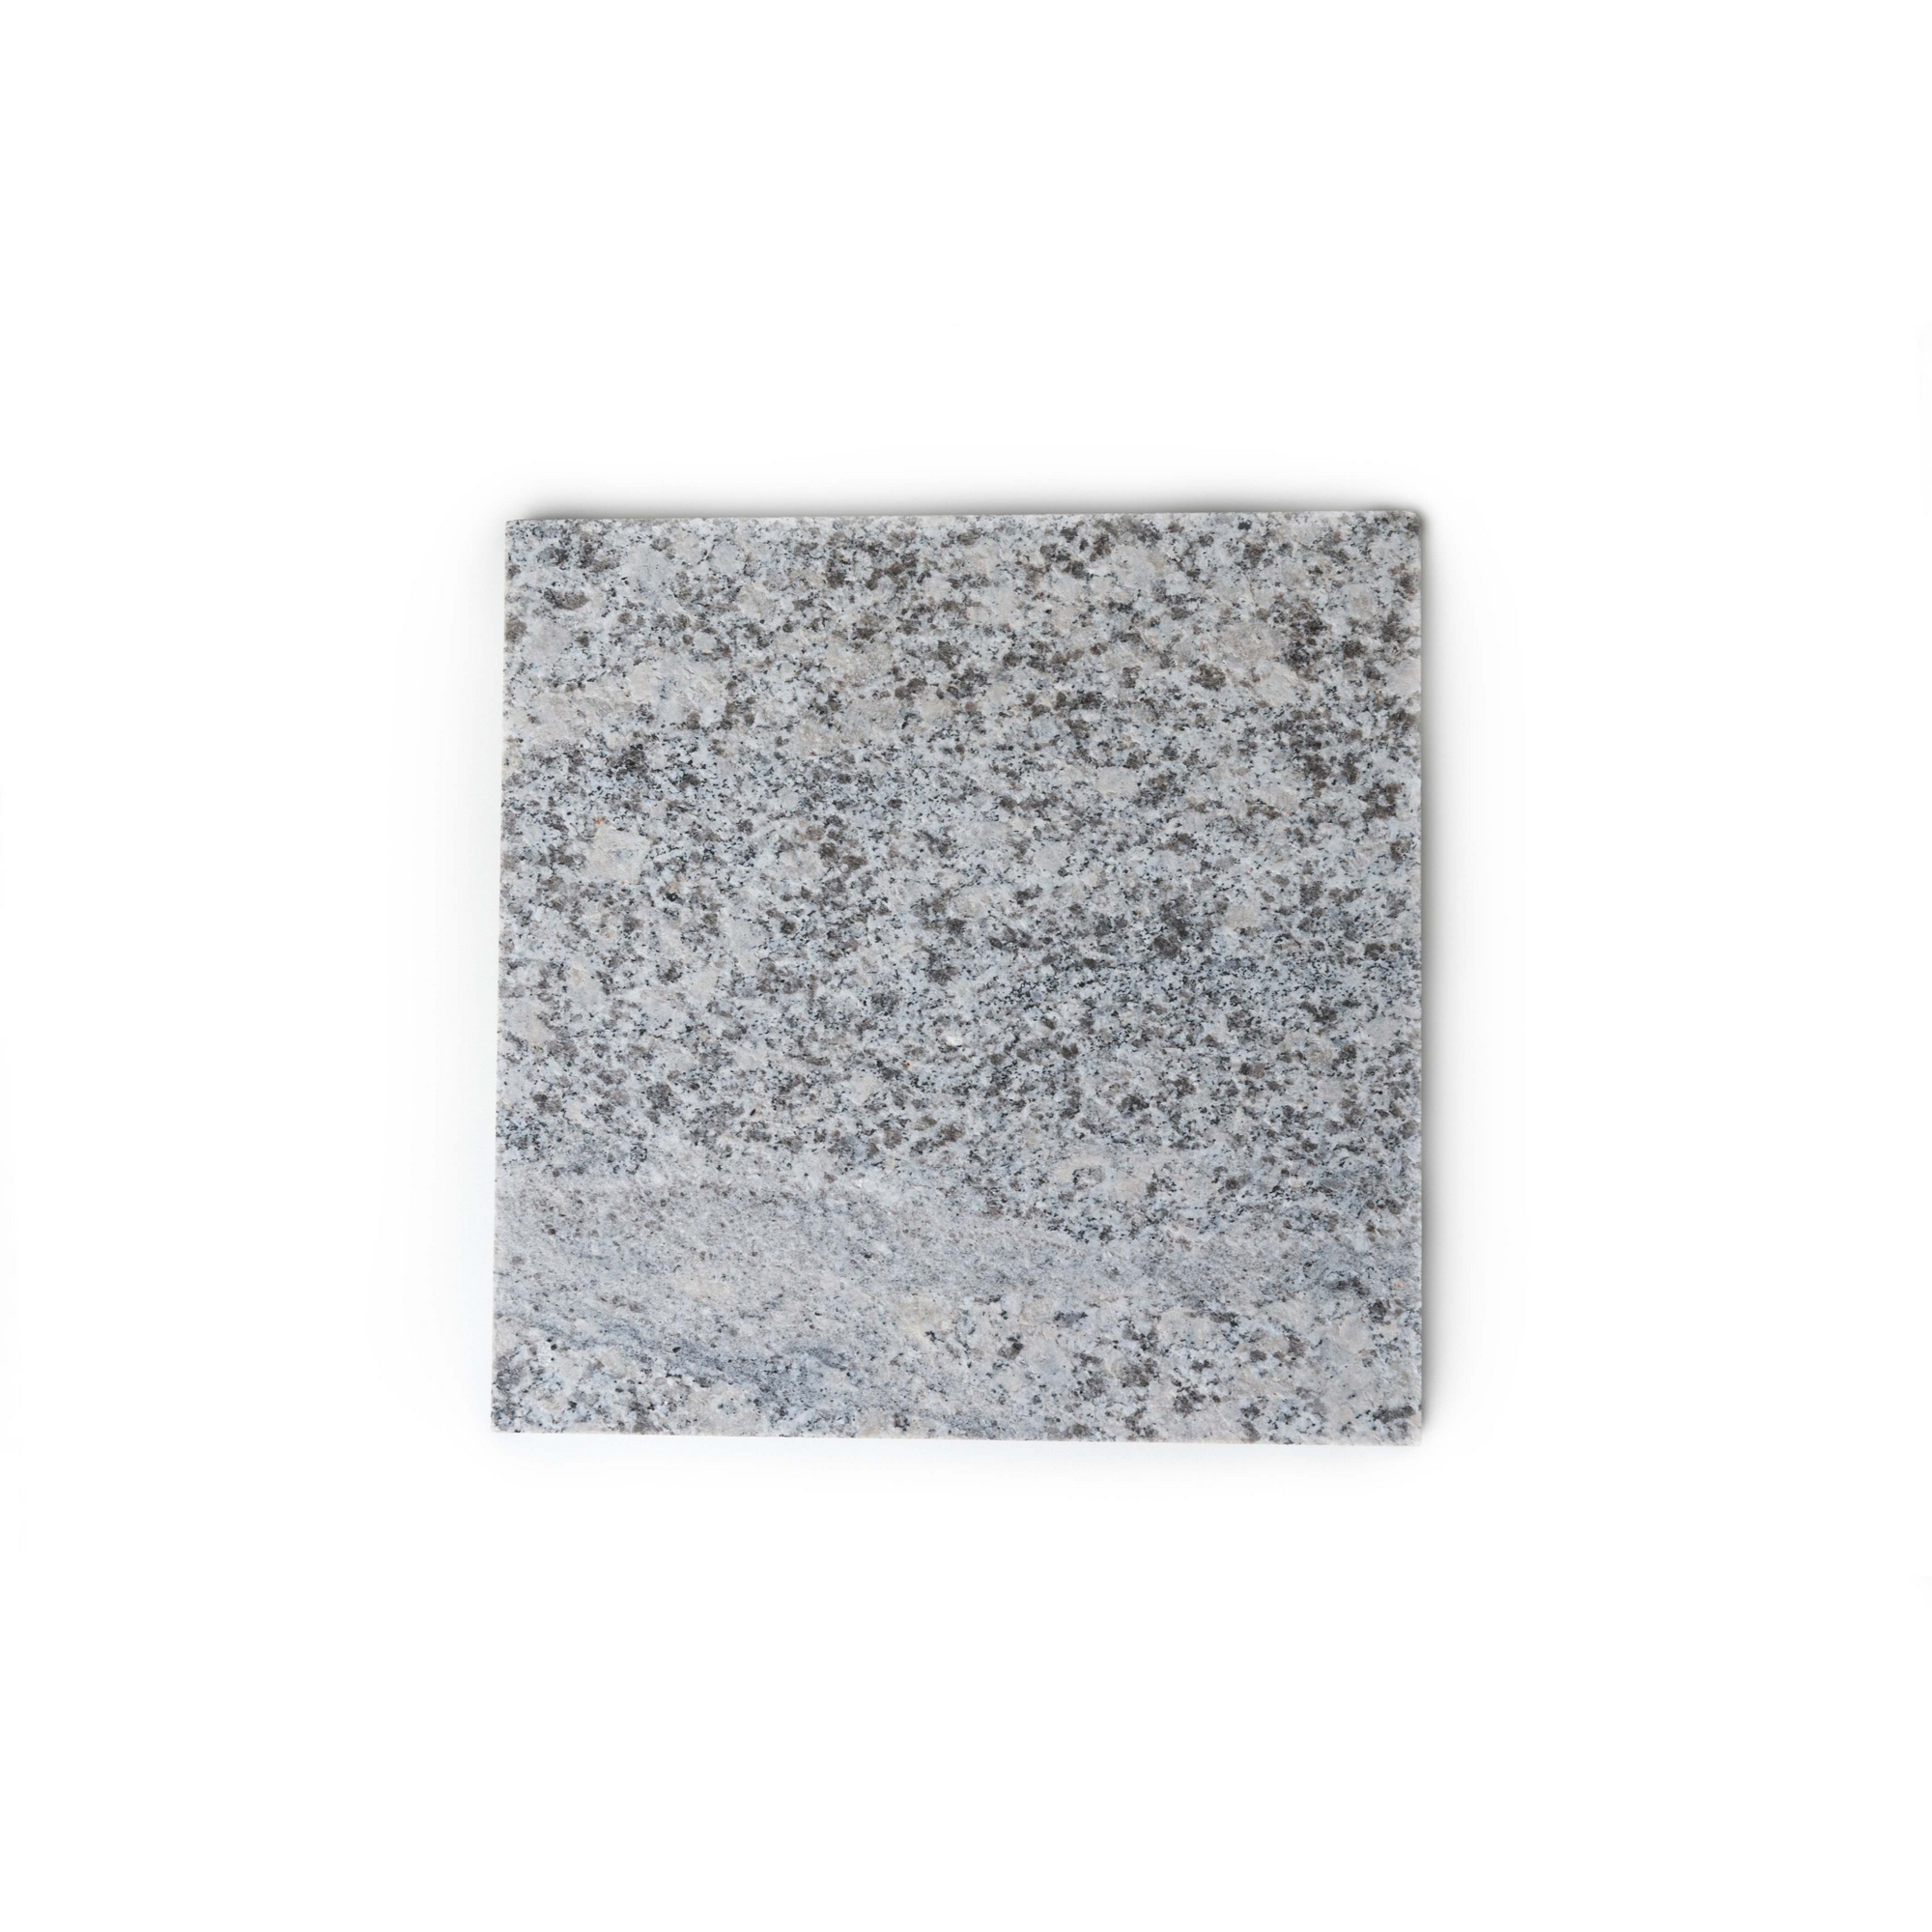 Terrassenplatte Granit granitfarben 40 x 40 x 3 cm + product picture